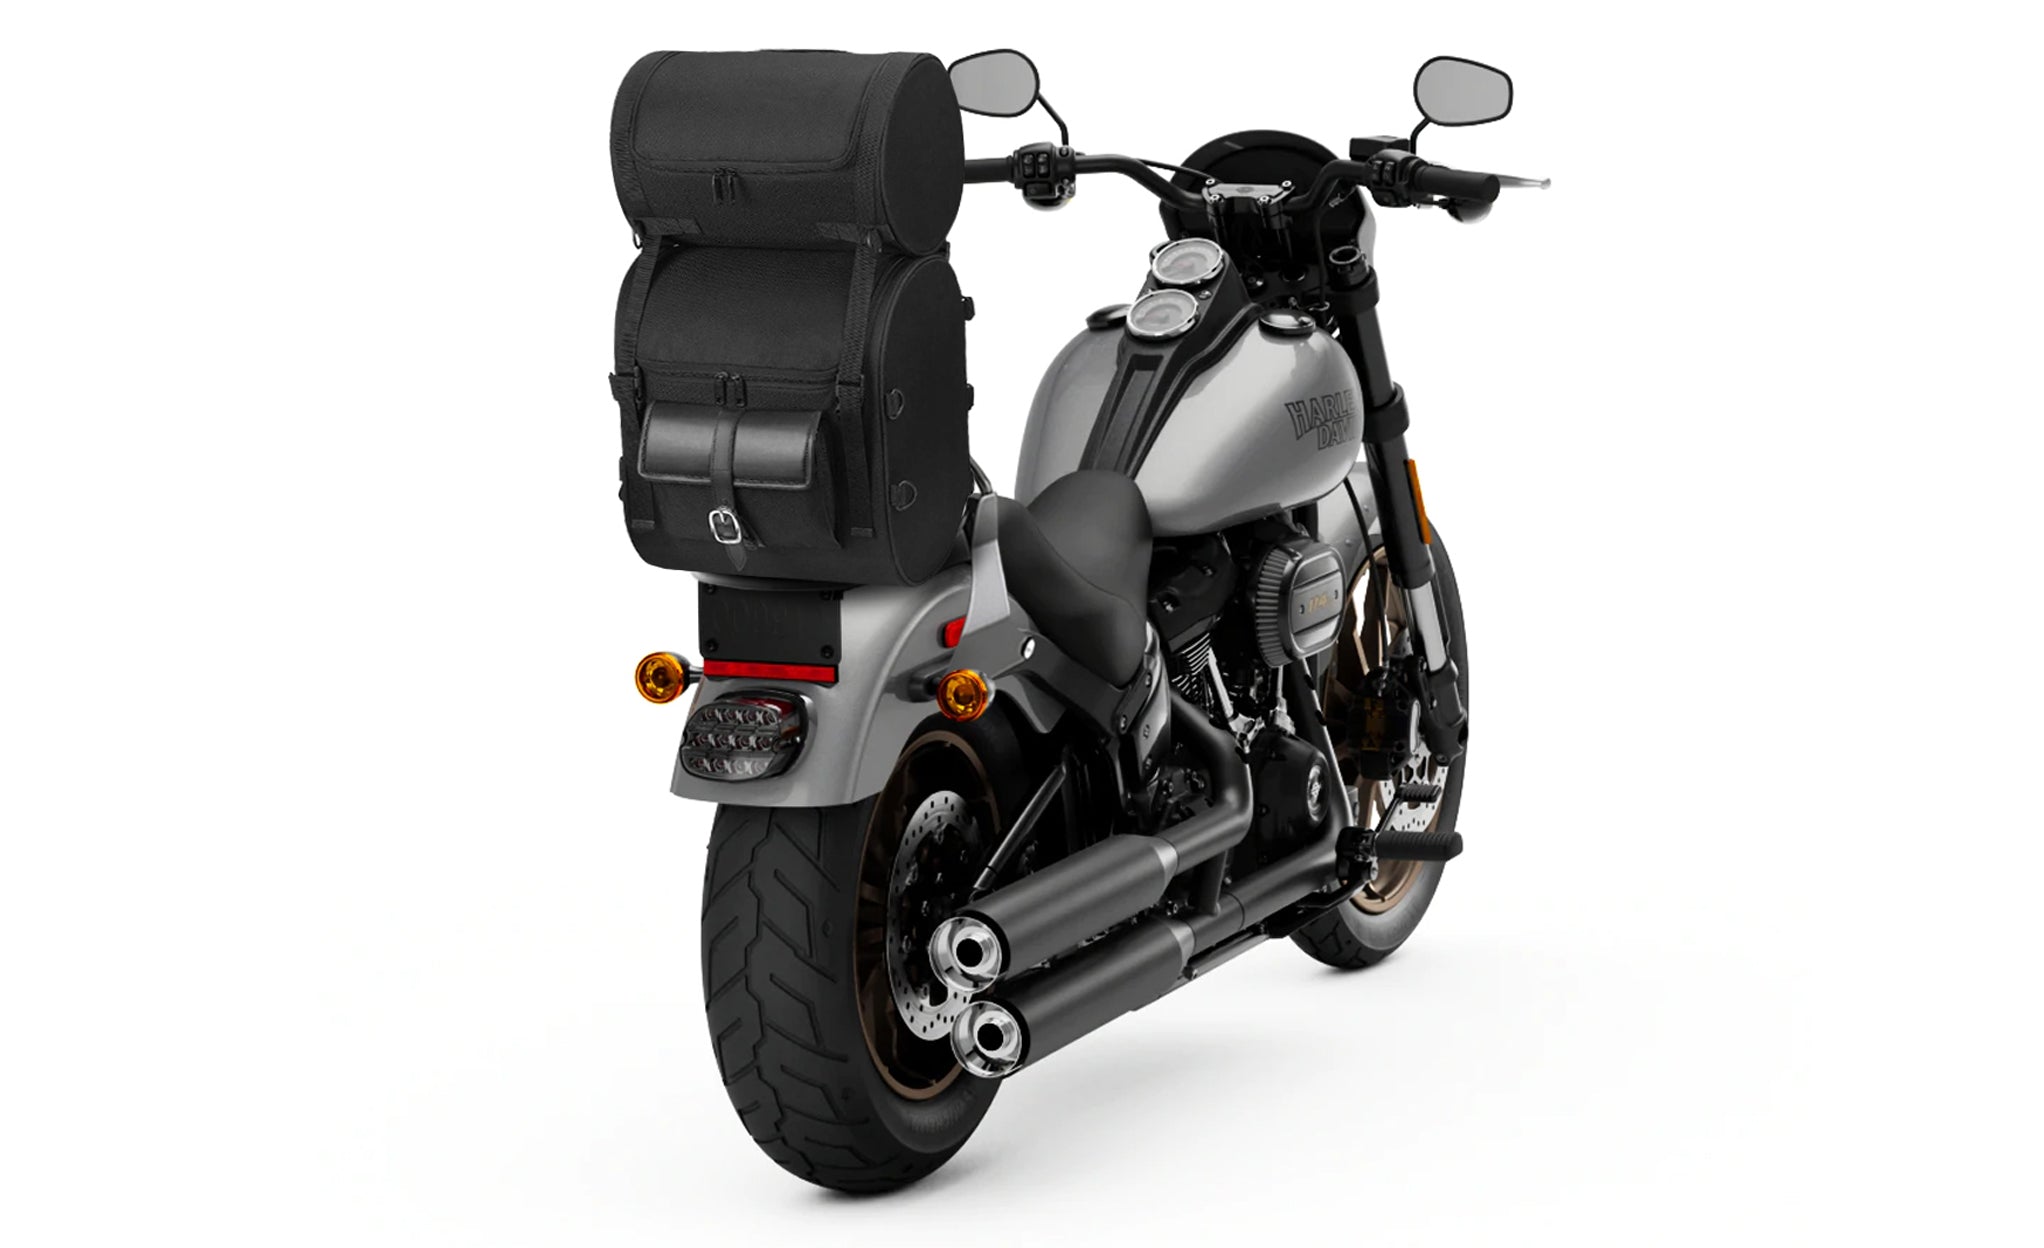 Viking Economy Line Medium Motorcycle Sissy Bar Bag Bag on Bike View @expand